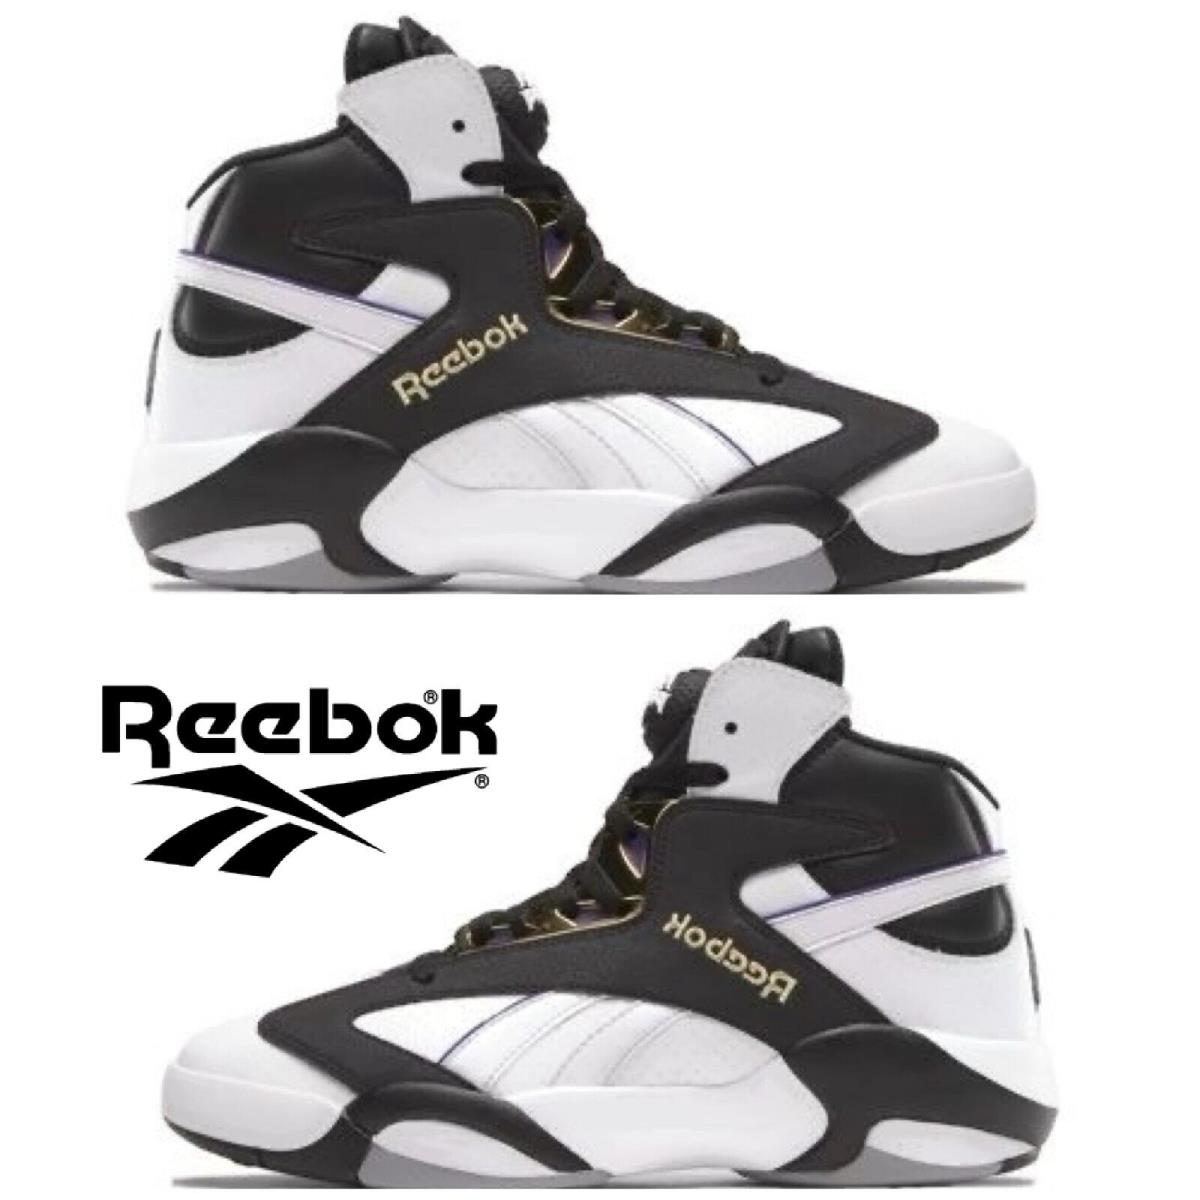 Reebok Shaq Attaq Basketball Shoes Men`s Sneakers Running Casual Sport Black - Black, Manufacturer: White / Core Black / Gold Metallic